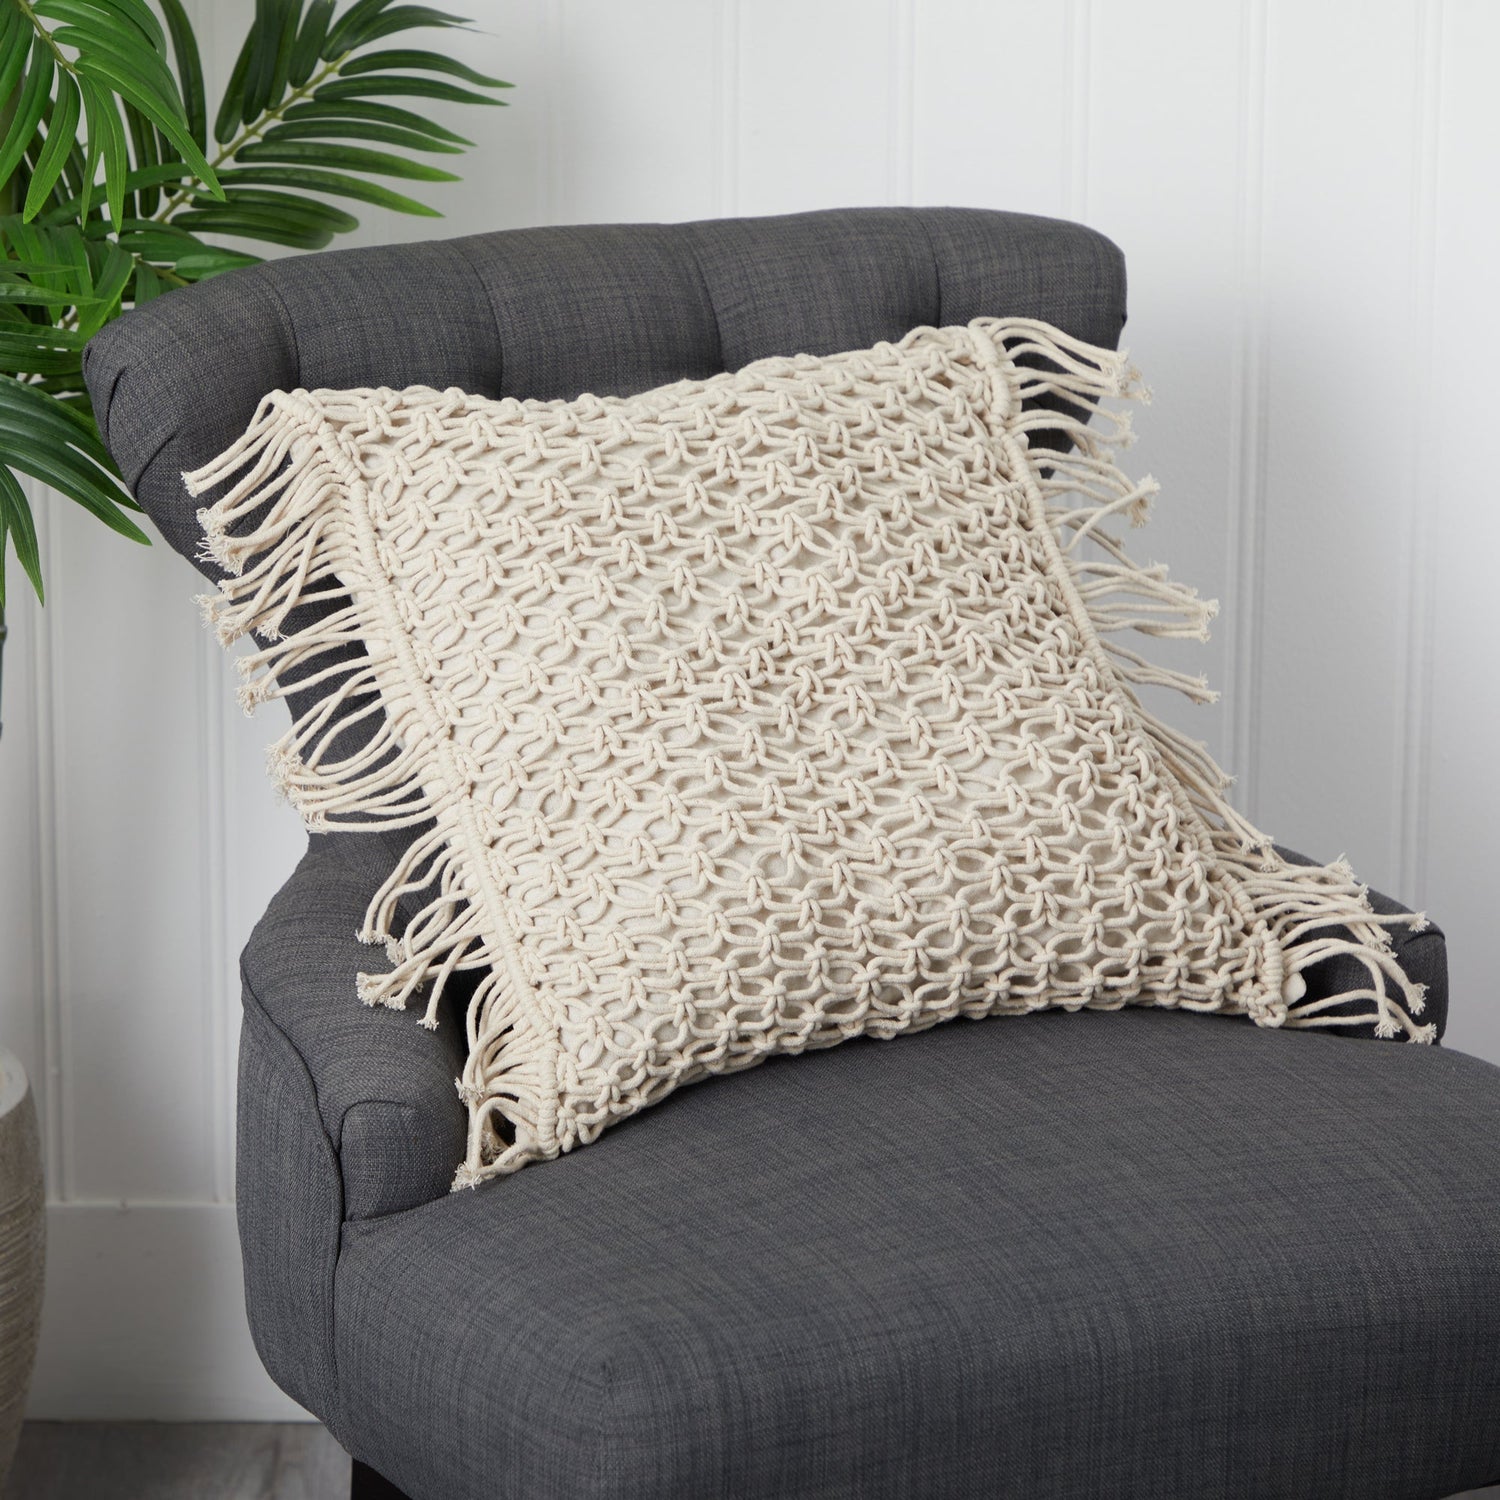 18” BOHO Fringed Woven Macrame Decorative Pillow Cover